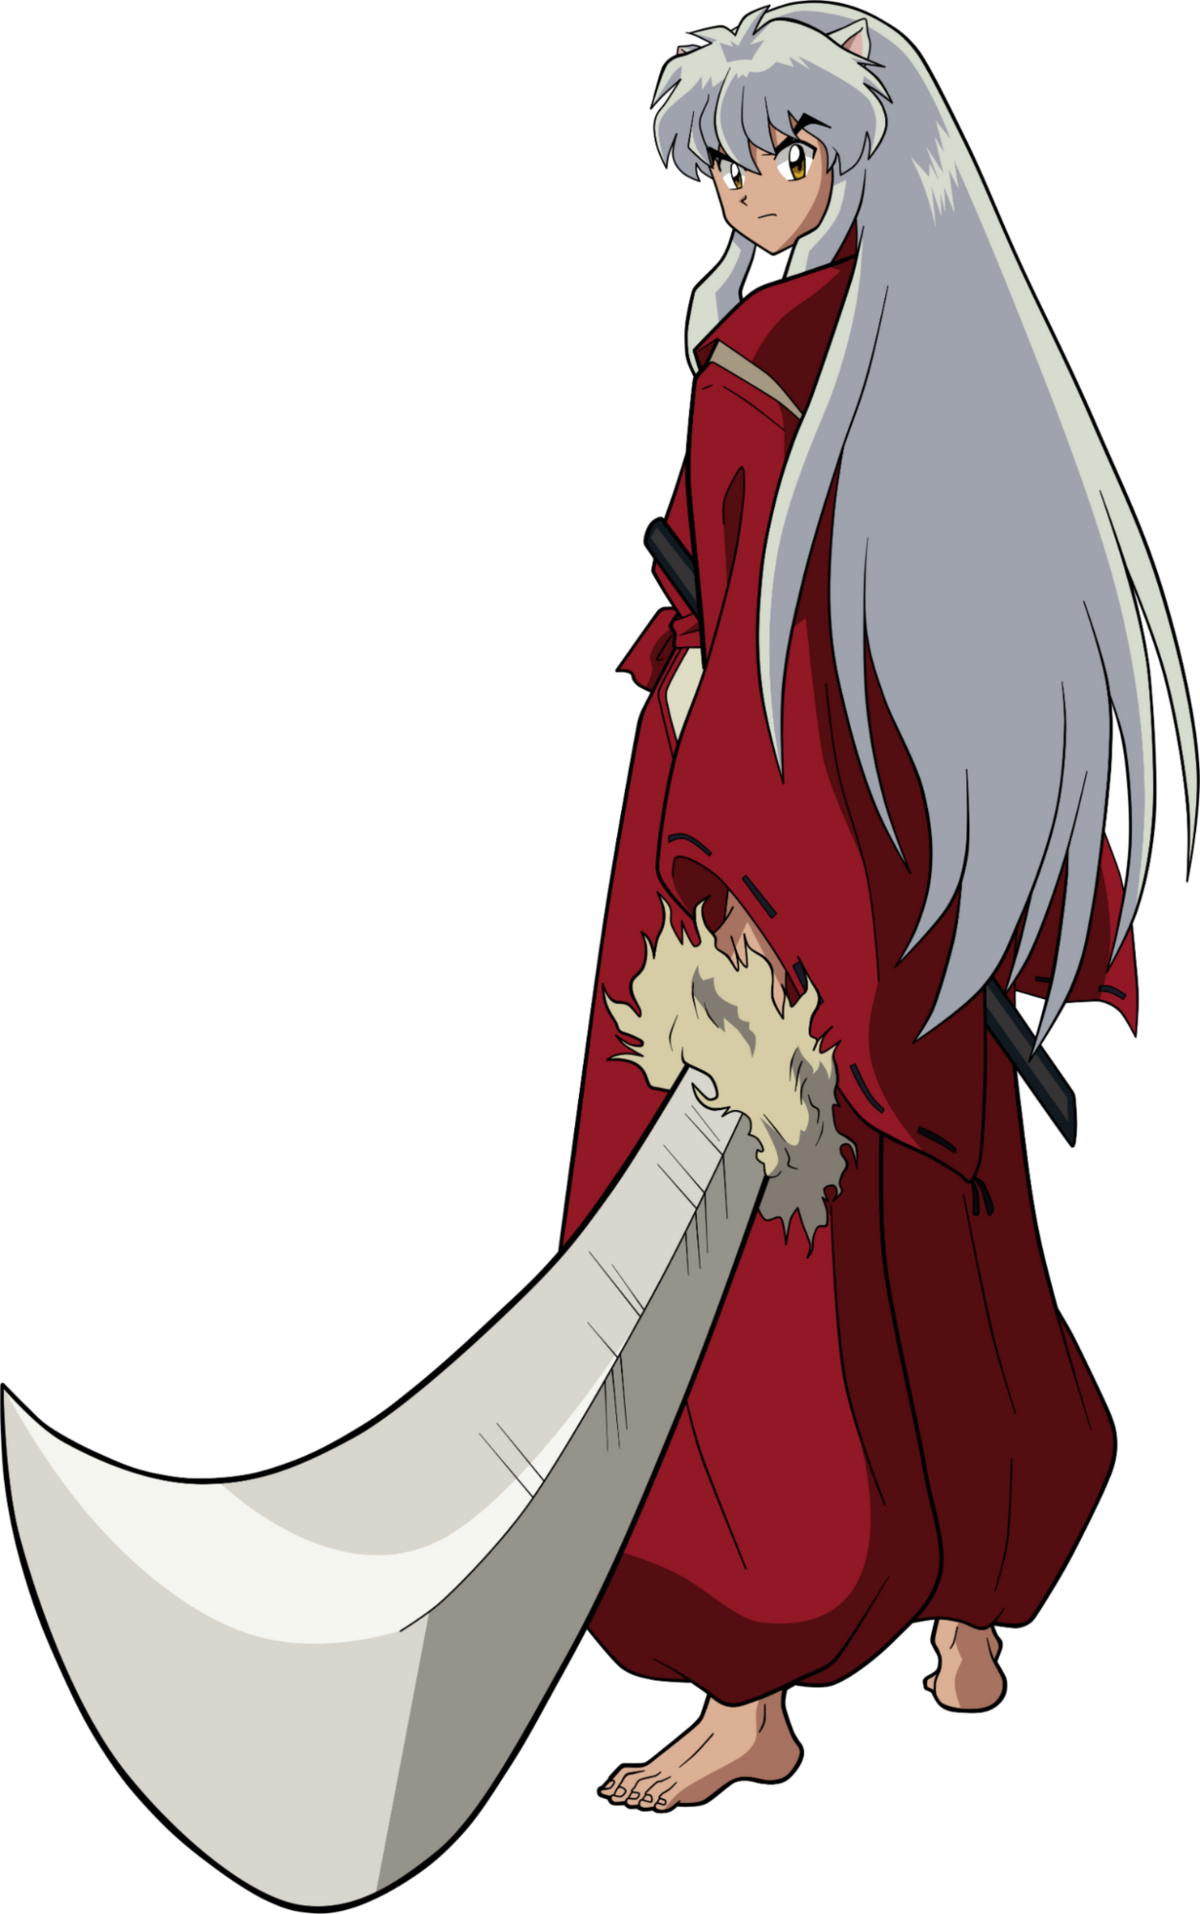 Inuyasha (character) - Wikipedia